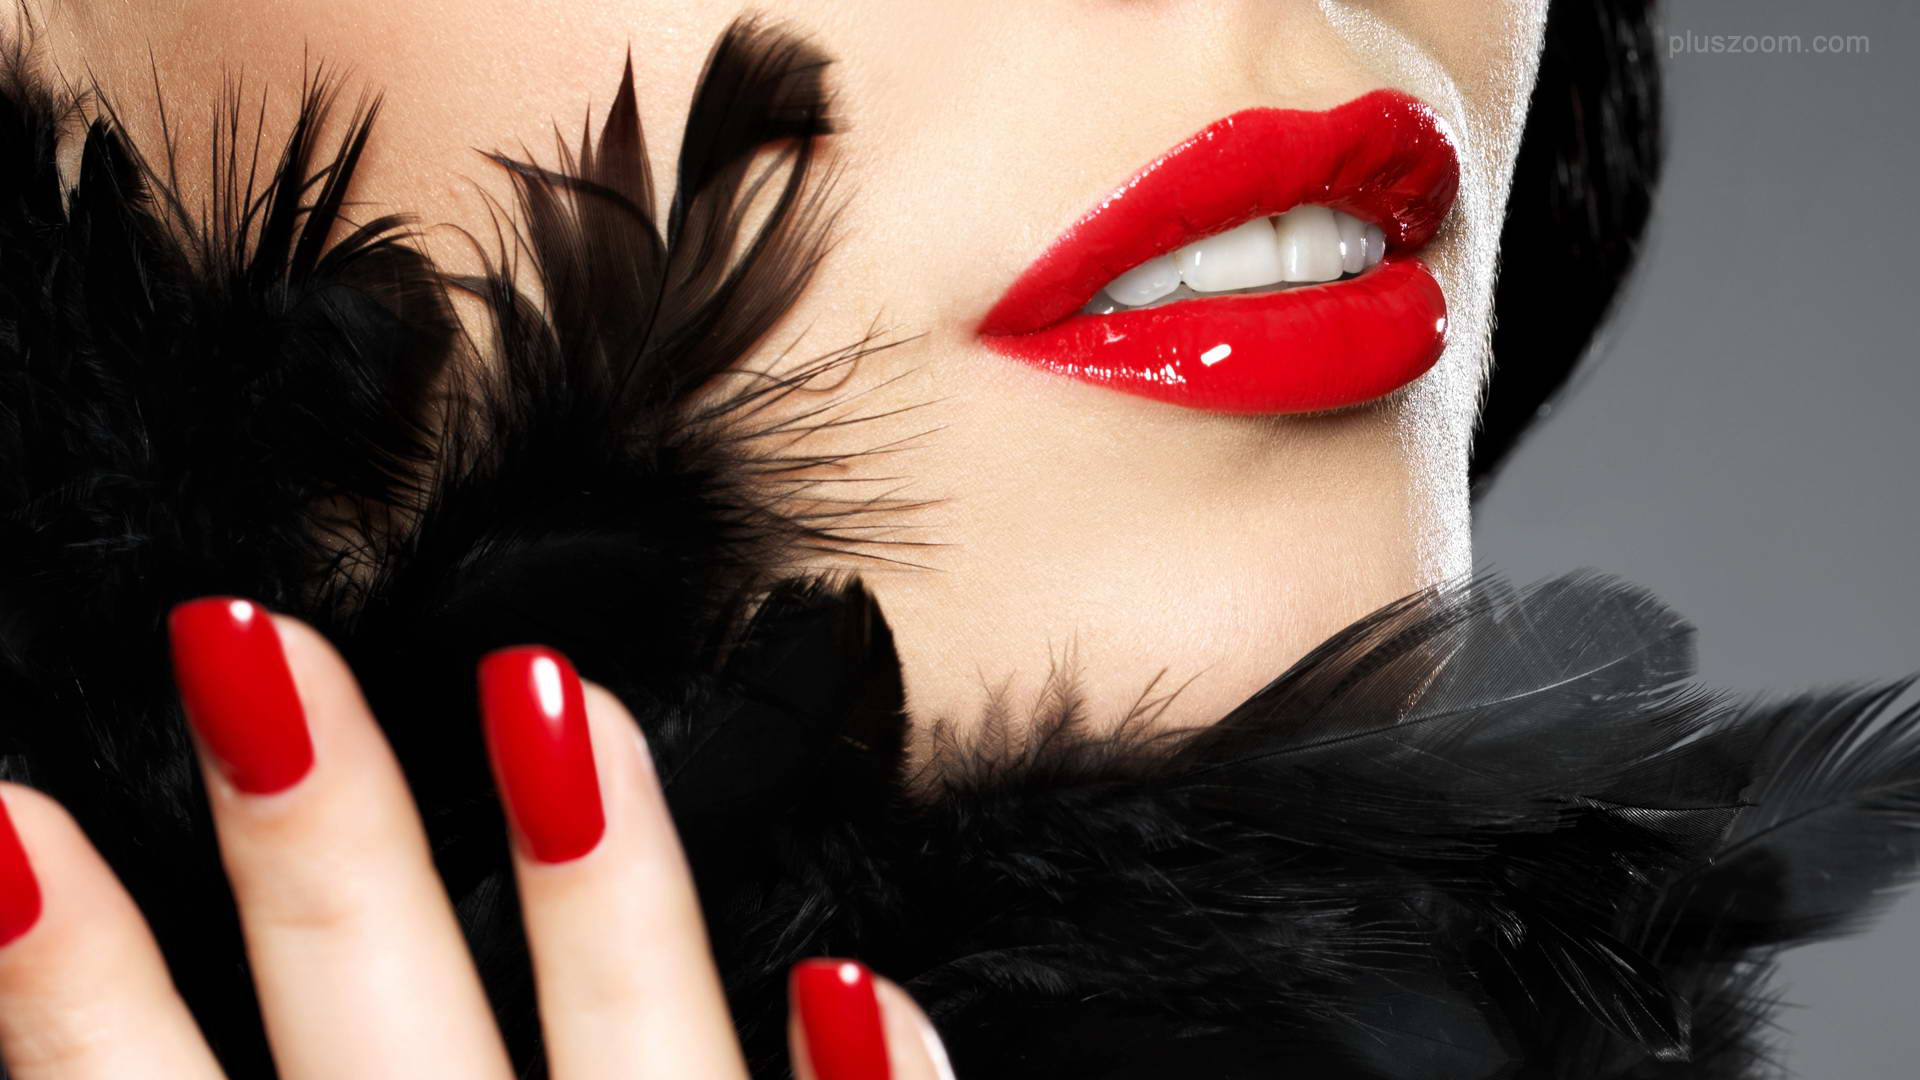 Beautiful Women Red Lips Wallpaper Pluszoom